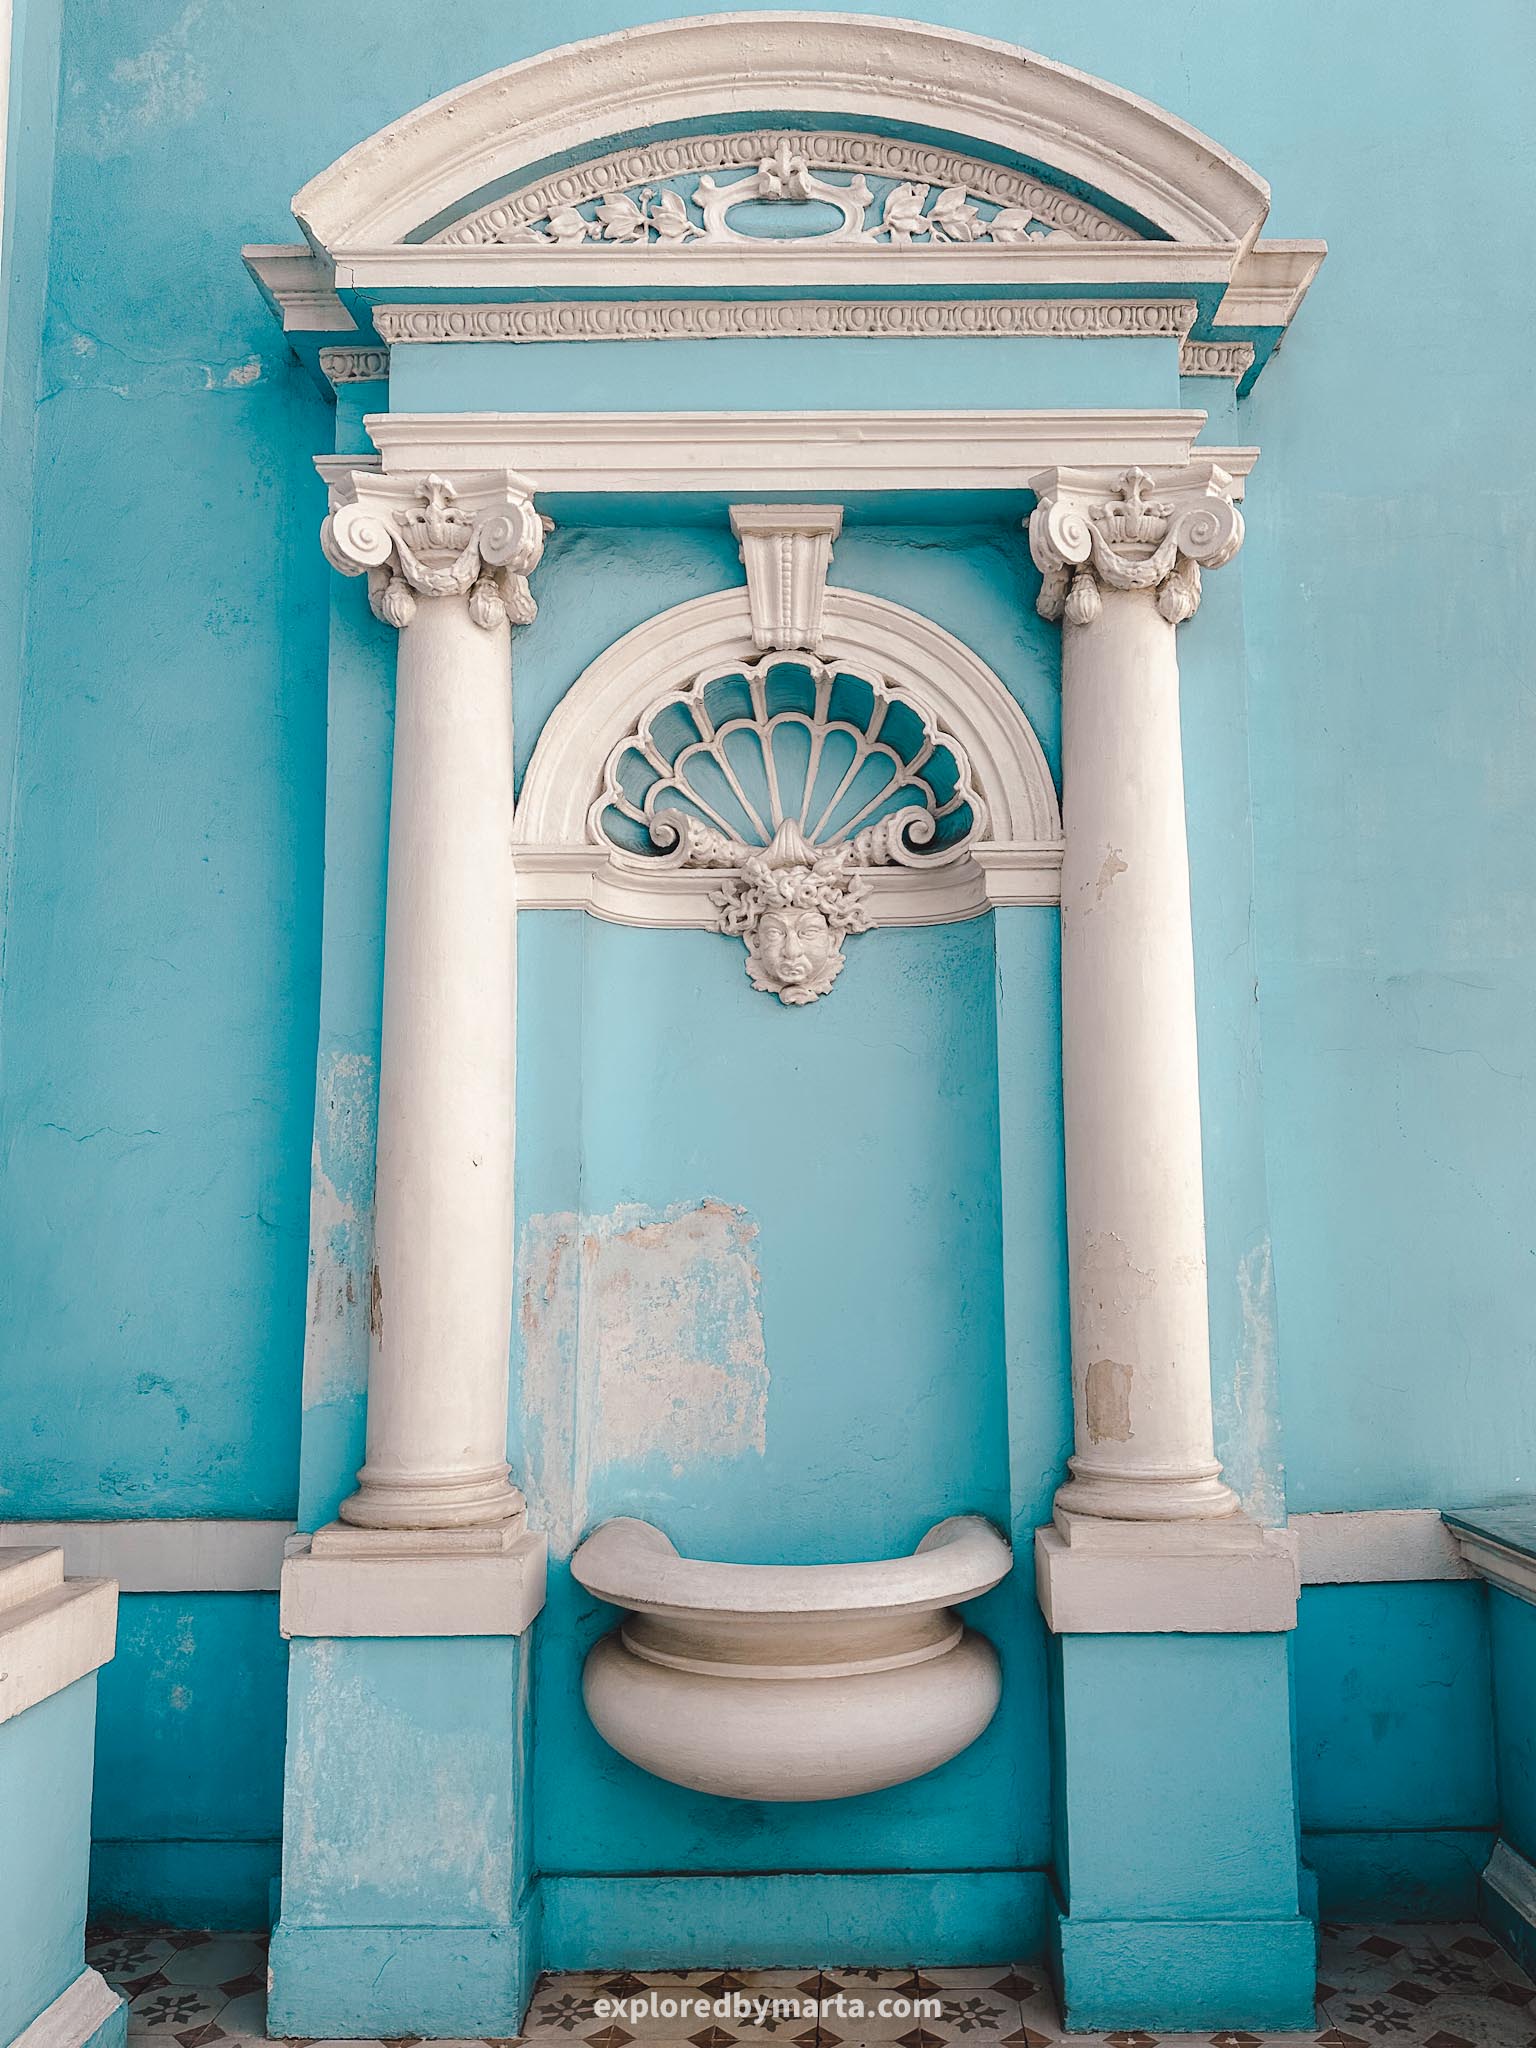 Merida, Mexico-Casa de la Cultura Jurídica - the most beautiful house in Merida painted in light blue color